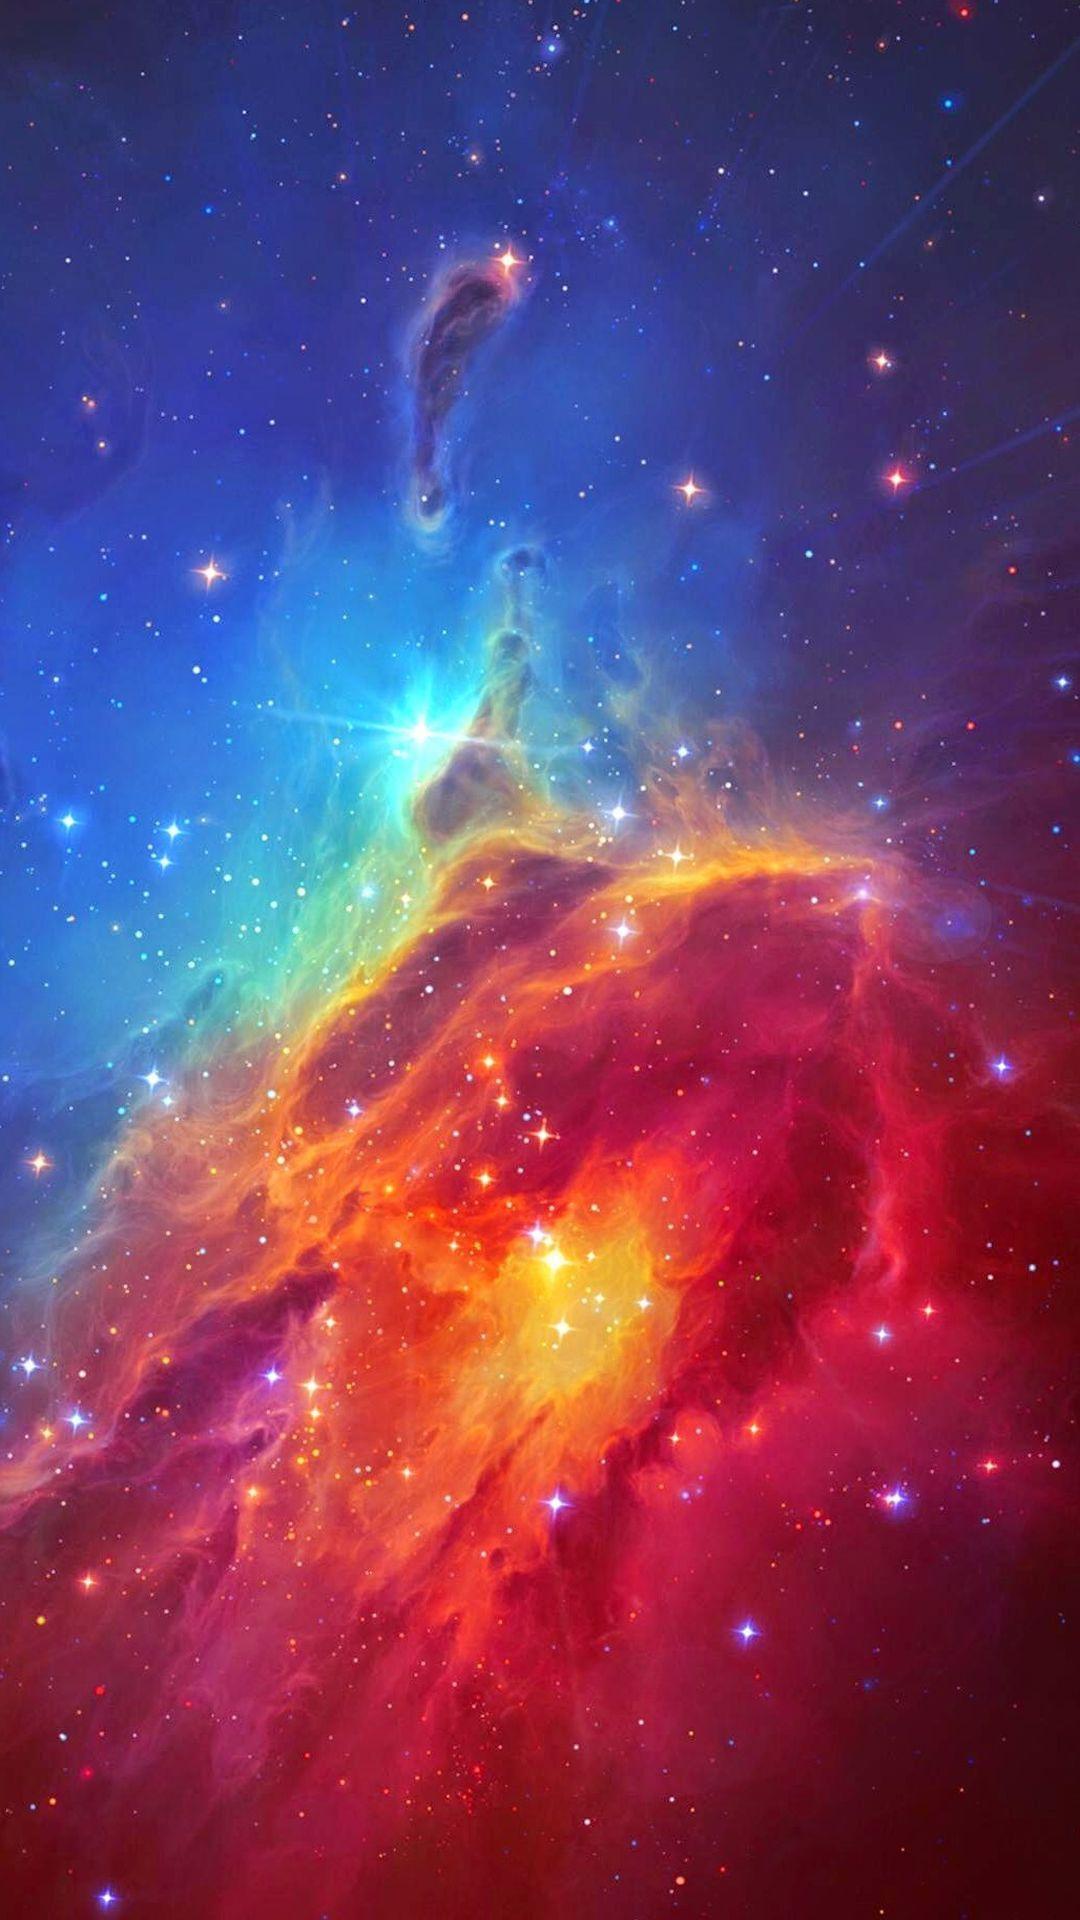 Stunning Colorful Space Nebula iPhone 6 Wallpaper Download. iPhone Wallpaper, iPad wallpaper O. Space iphone wallpaper, Hubble space telescope, Space telescope